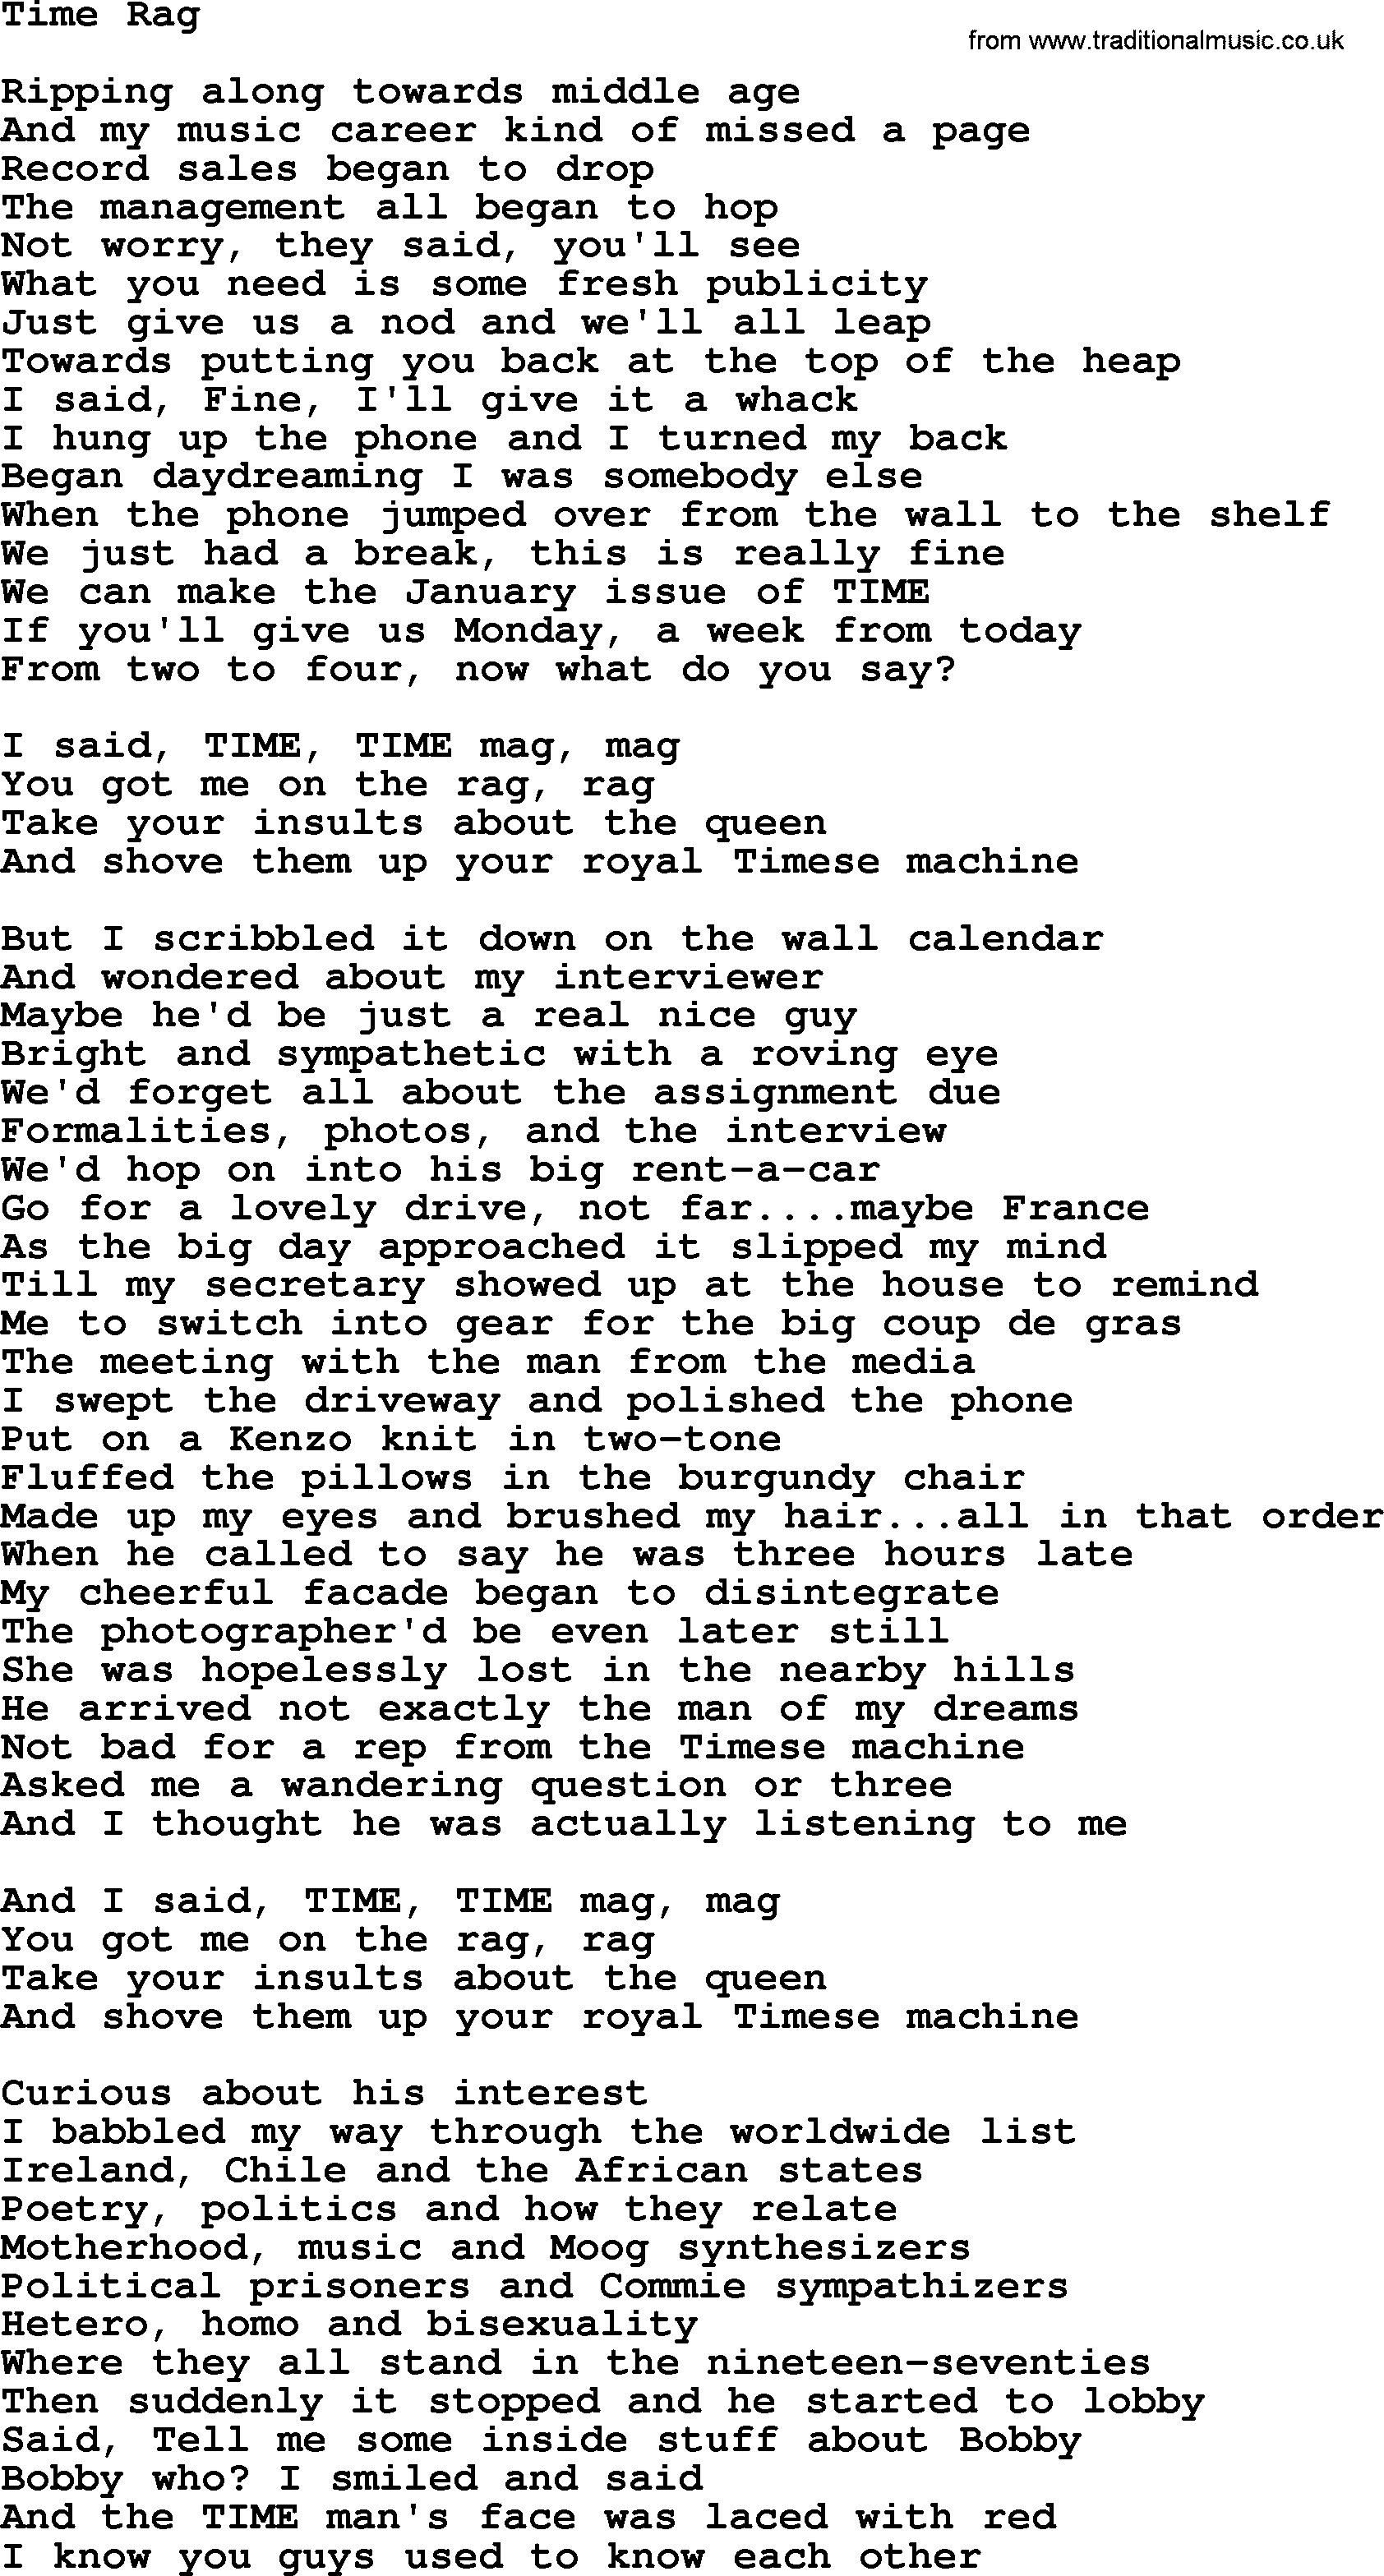 Joan Baez song Time Rag, lyrics